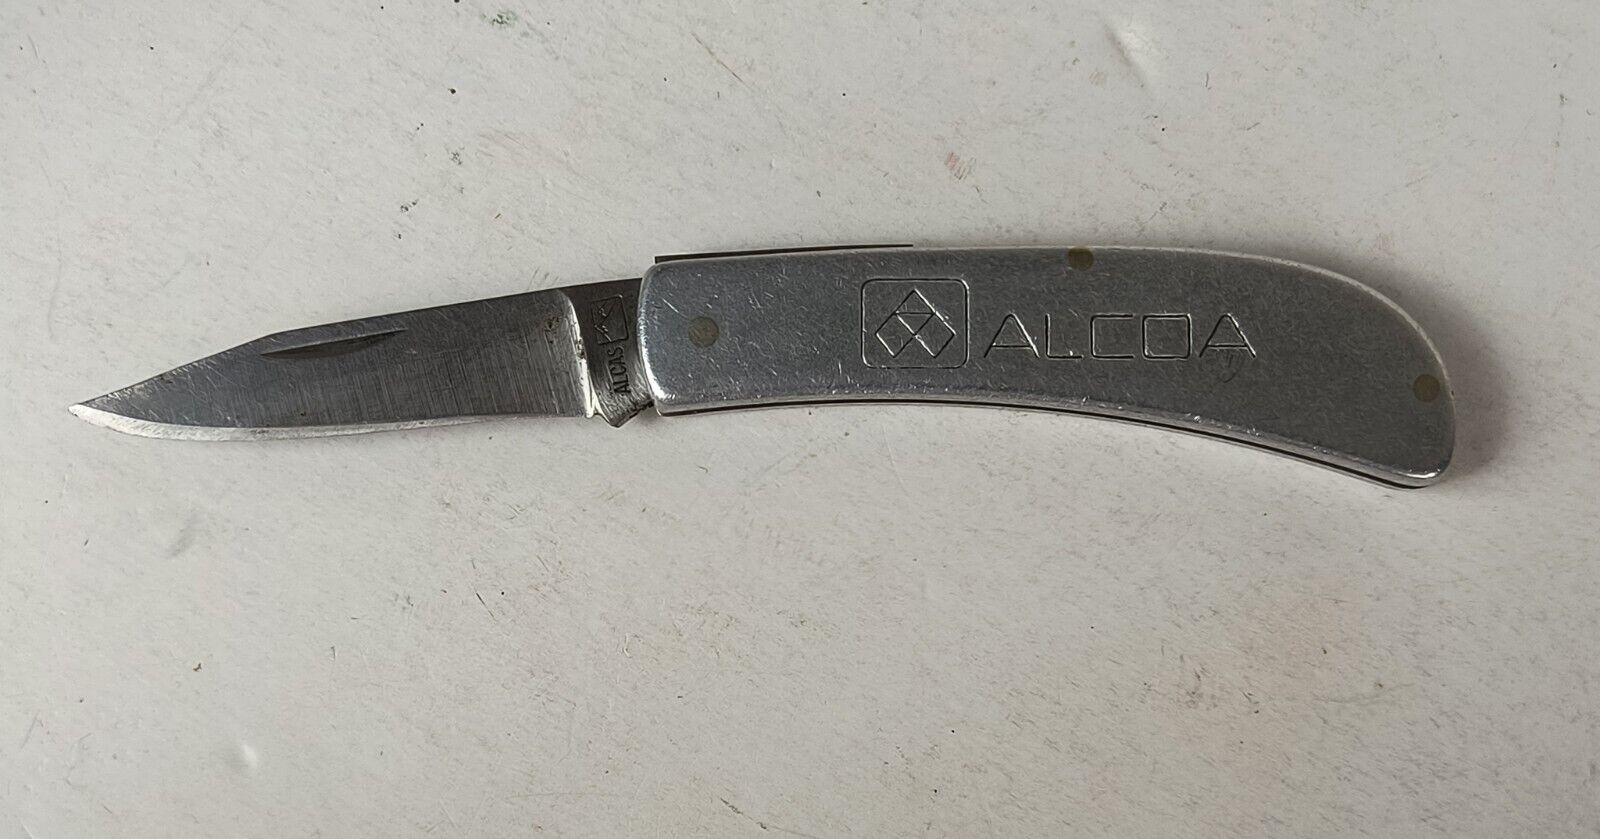 Alcas ALCOA Stainless Steel Blade Folding Pocket Knife